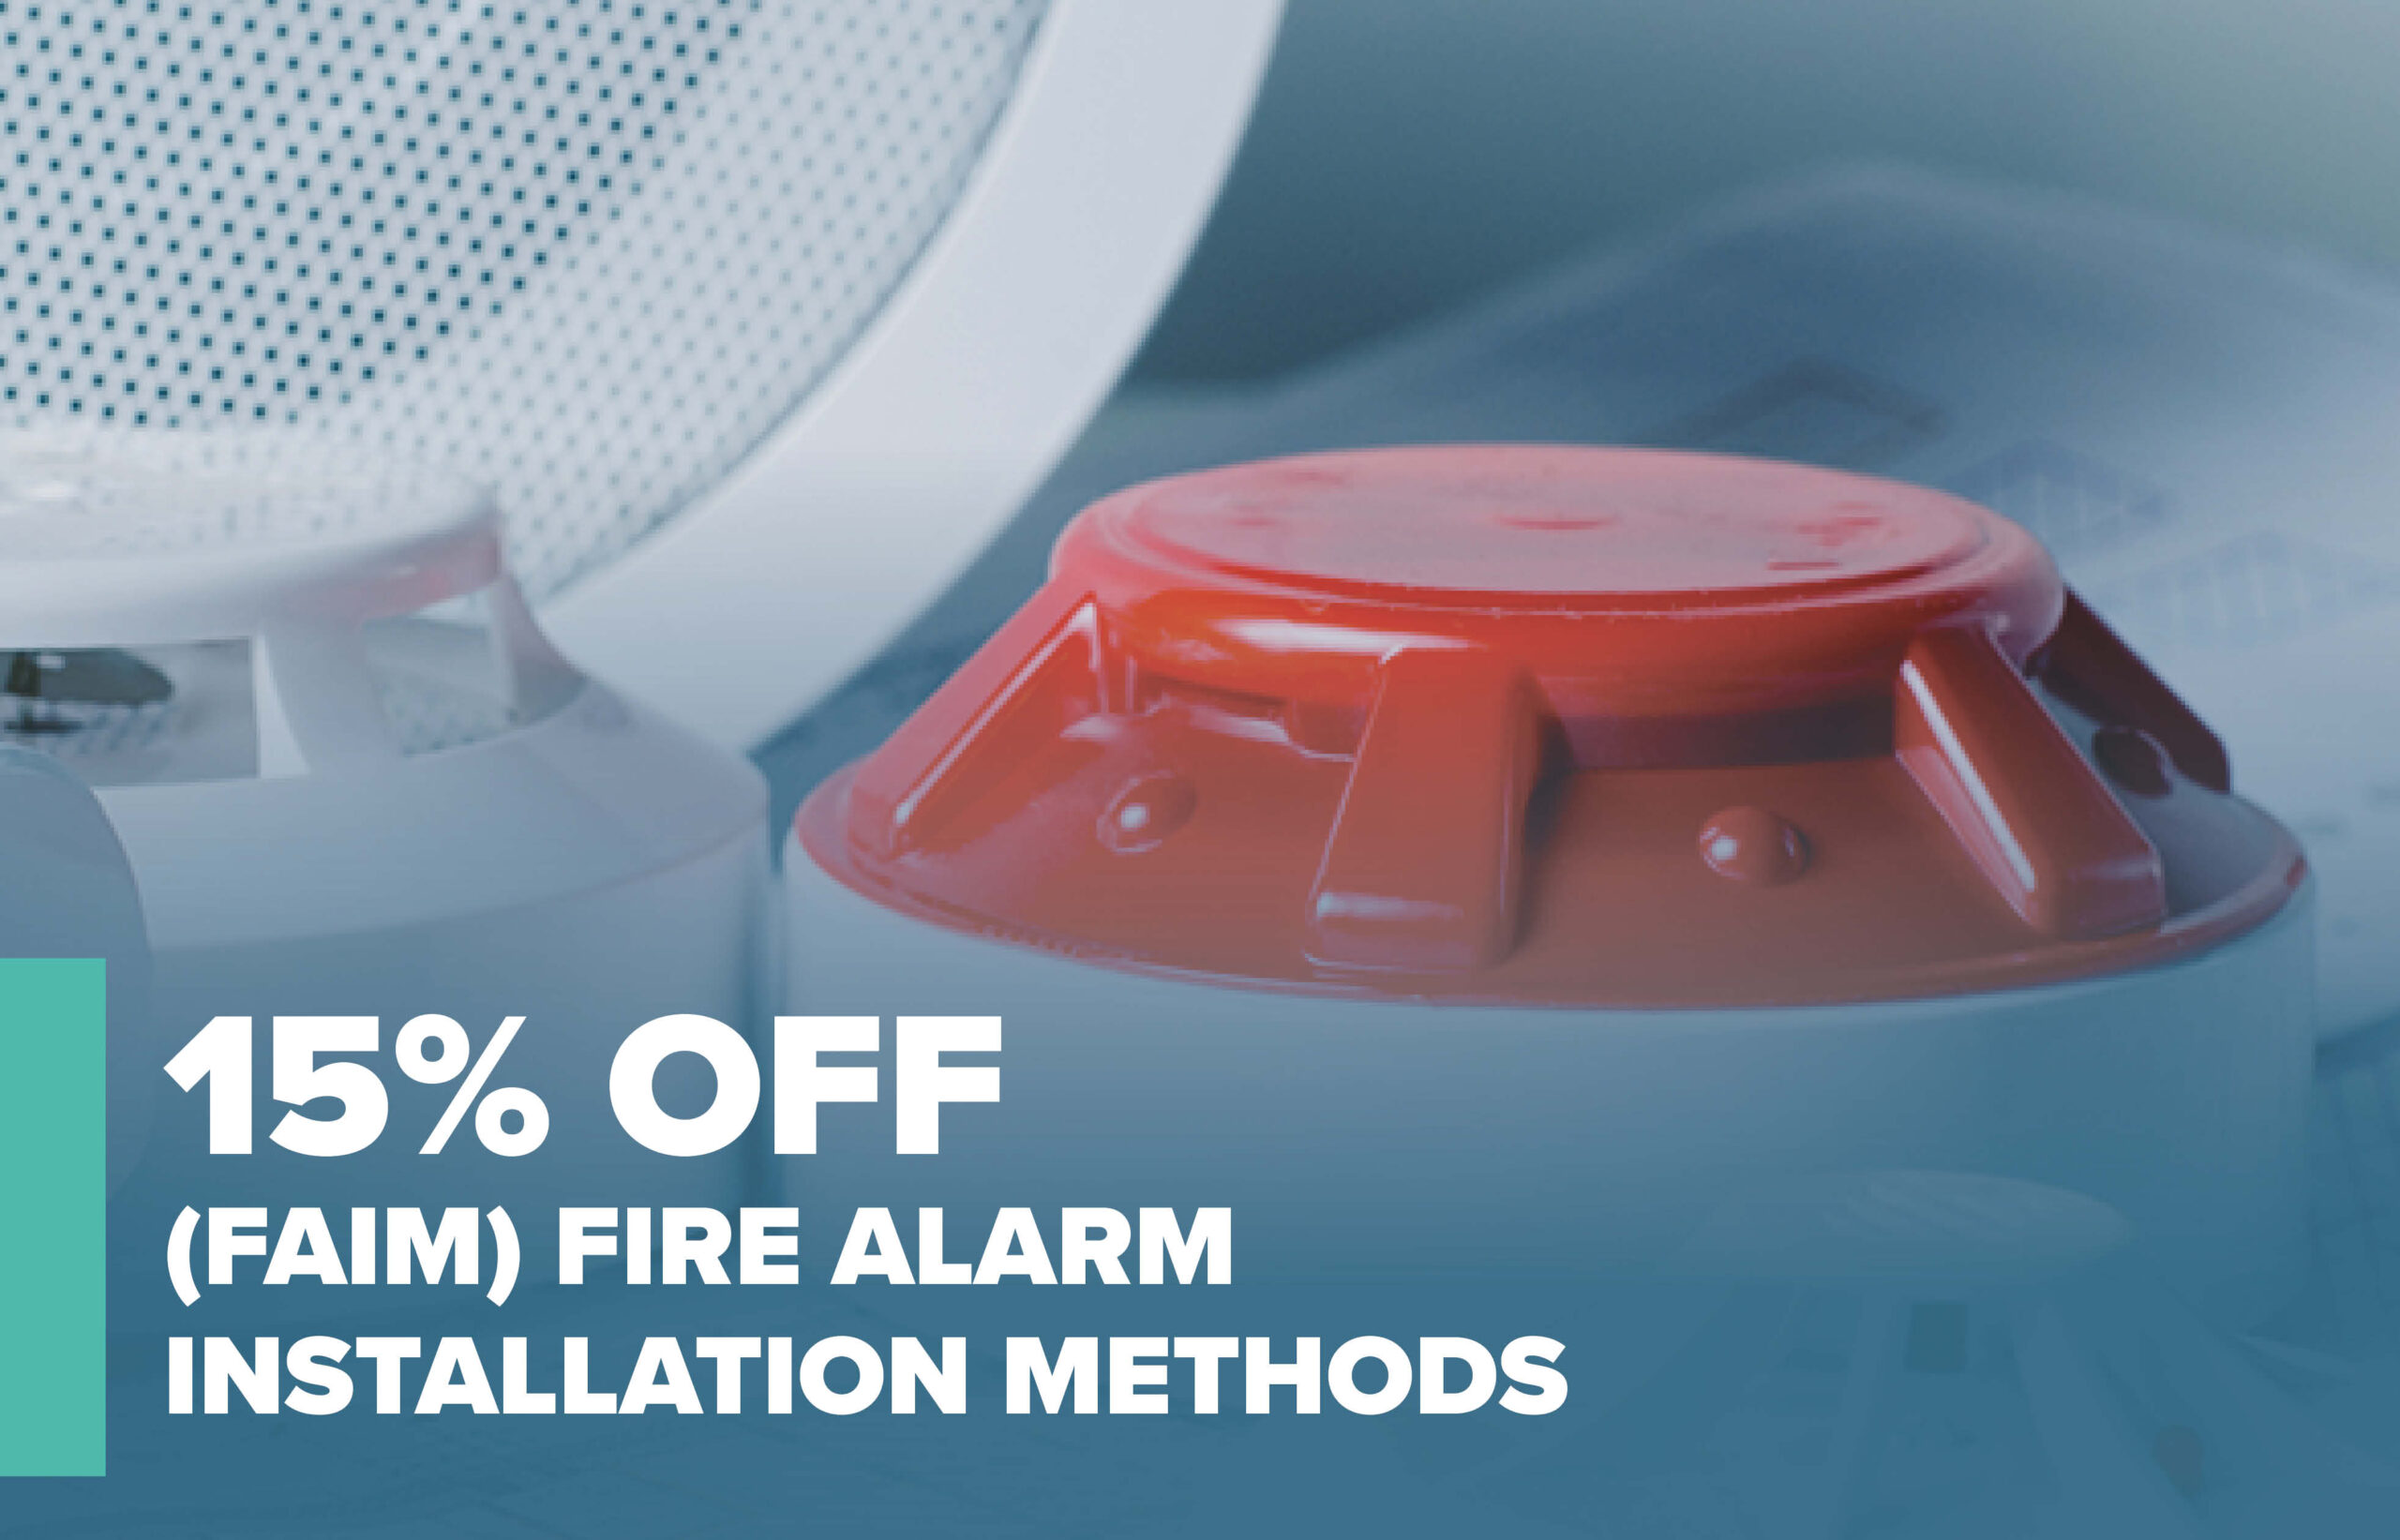 Save 15% on Fire Alarm Installation Methods through August